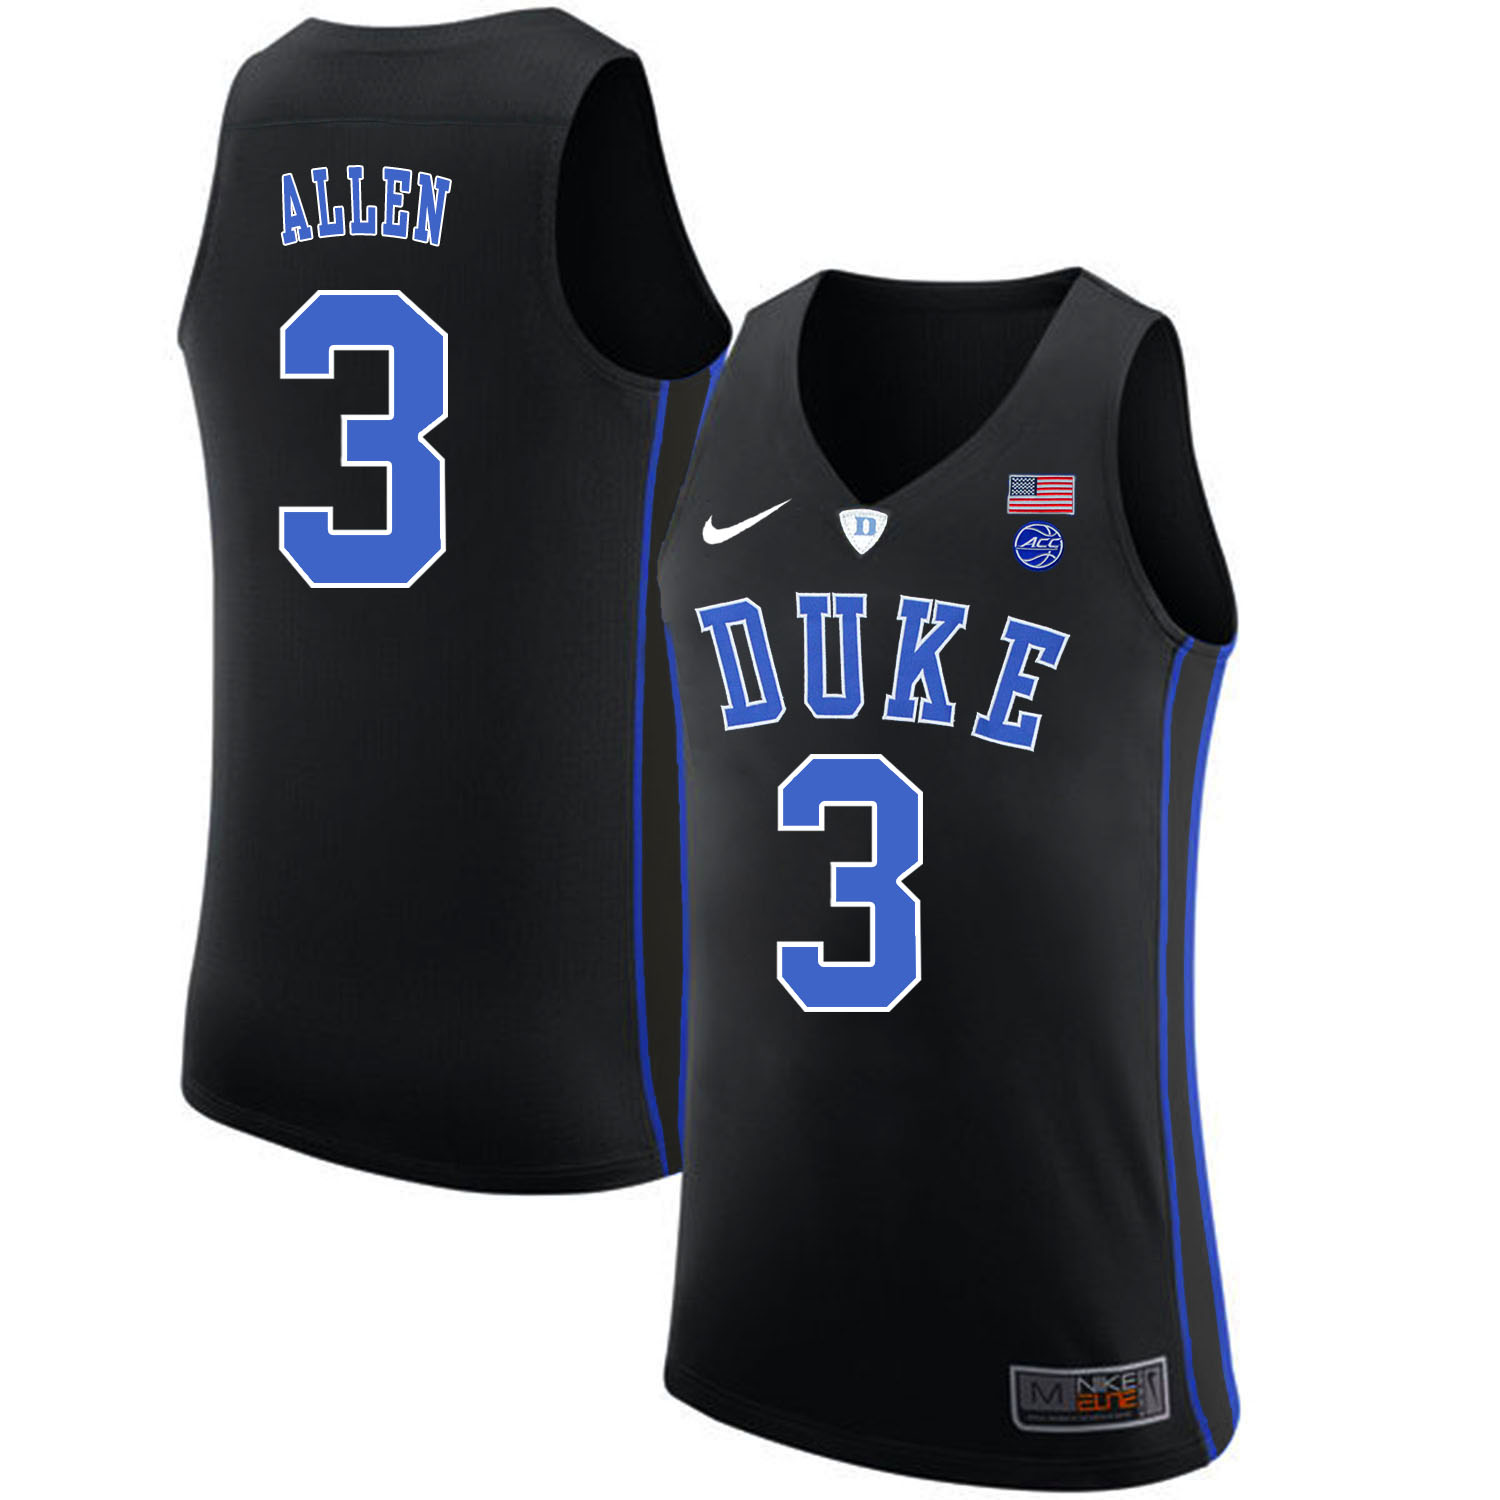 Duke Blue Devils 3 Garyson Allen Black Nike College Basketball Jersey